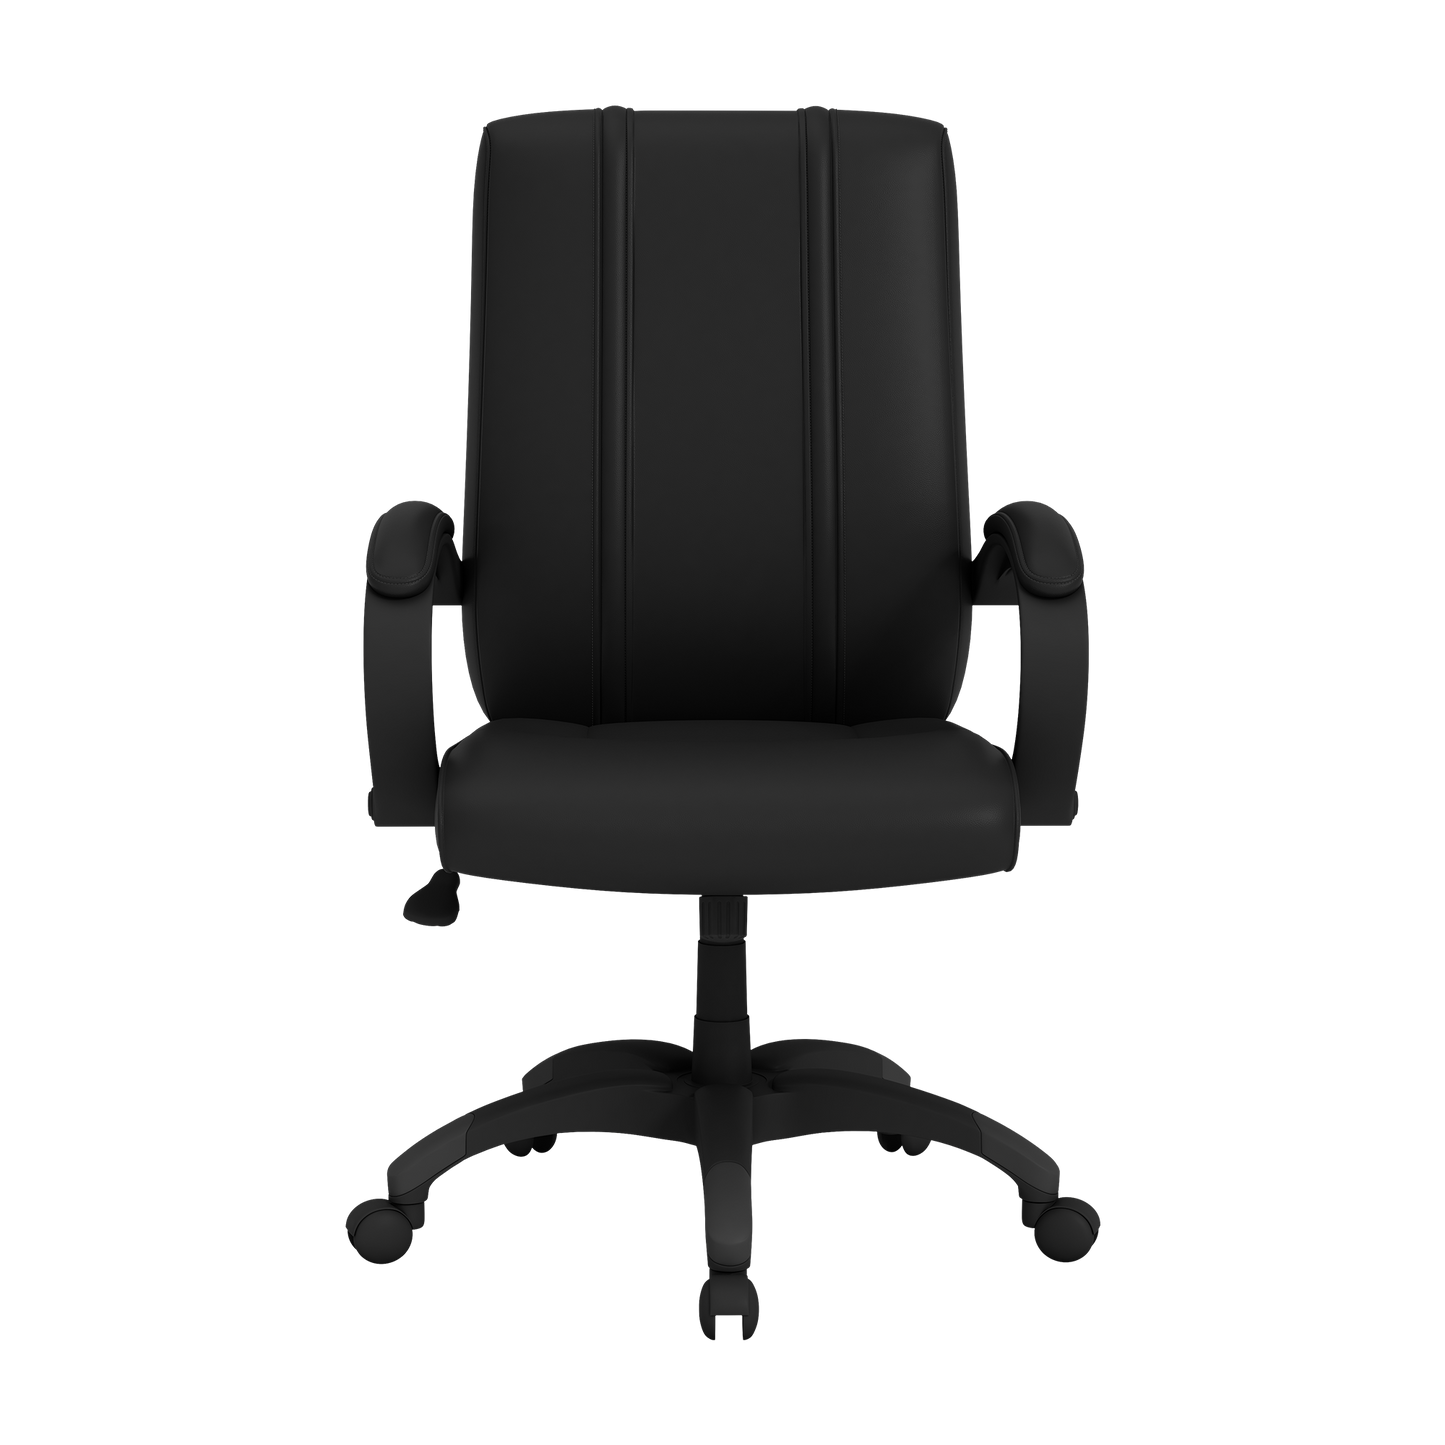 Office Chair 1000 with San Jose Earthquakes Alternate Logo